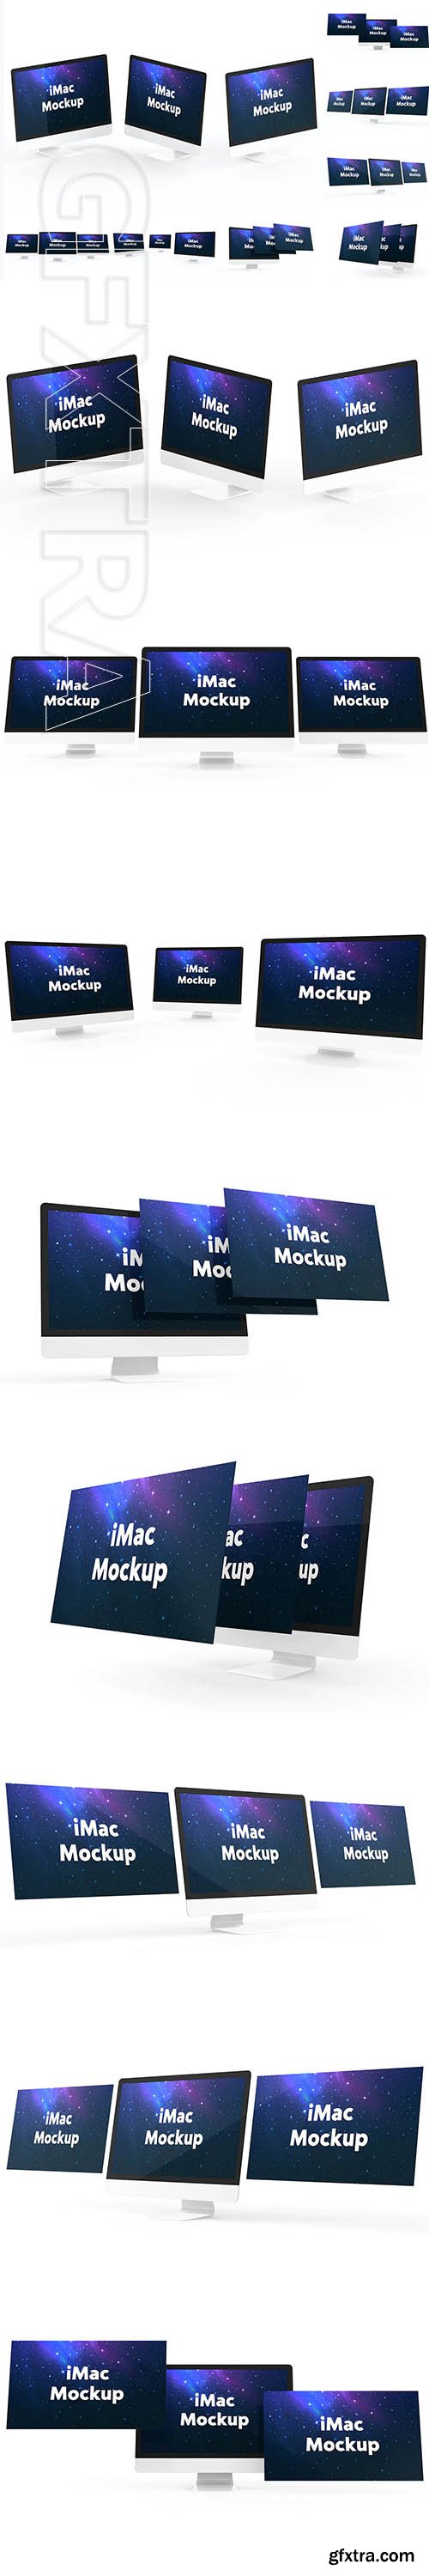 iMac Mockup Set